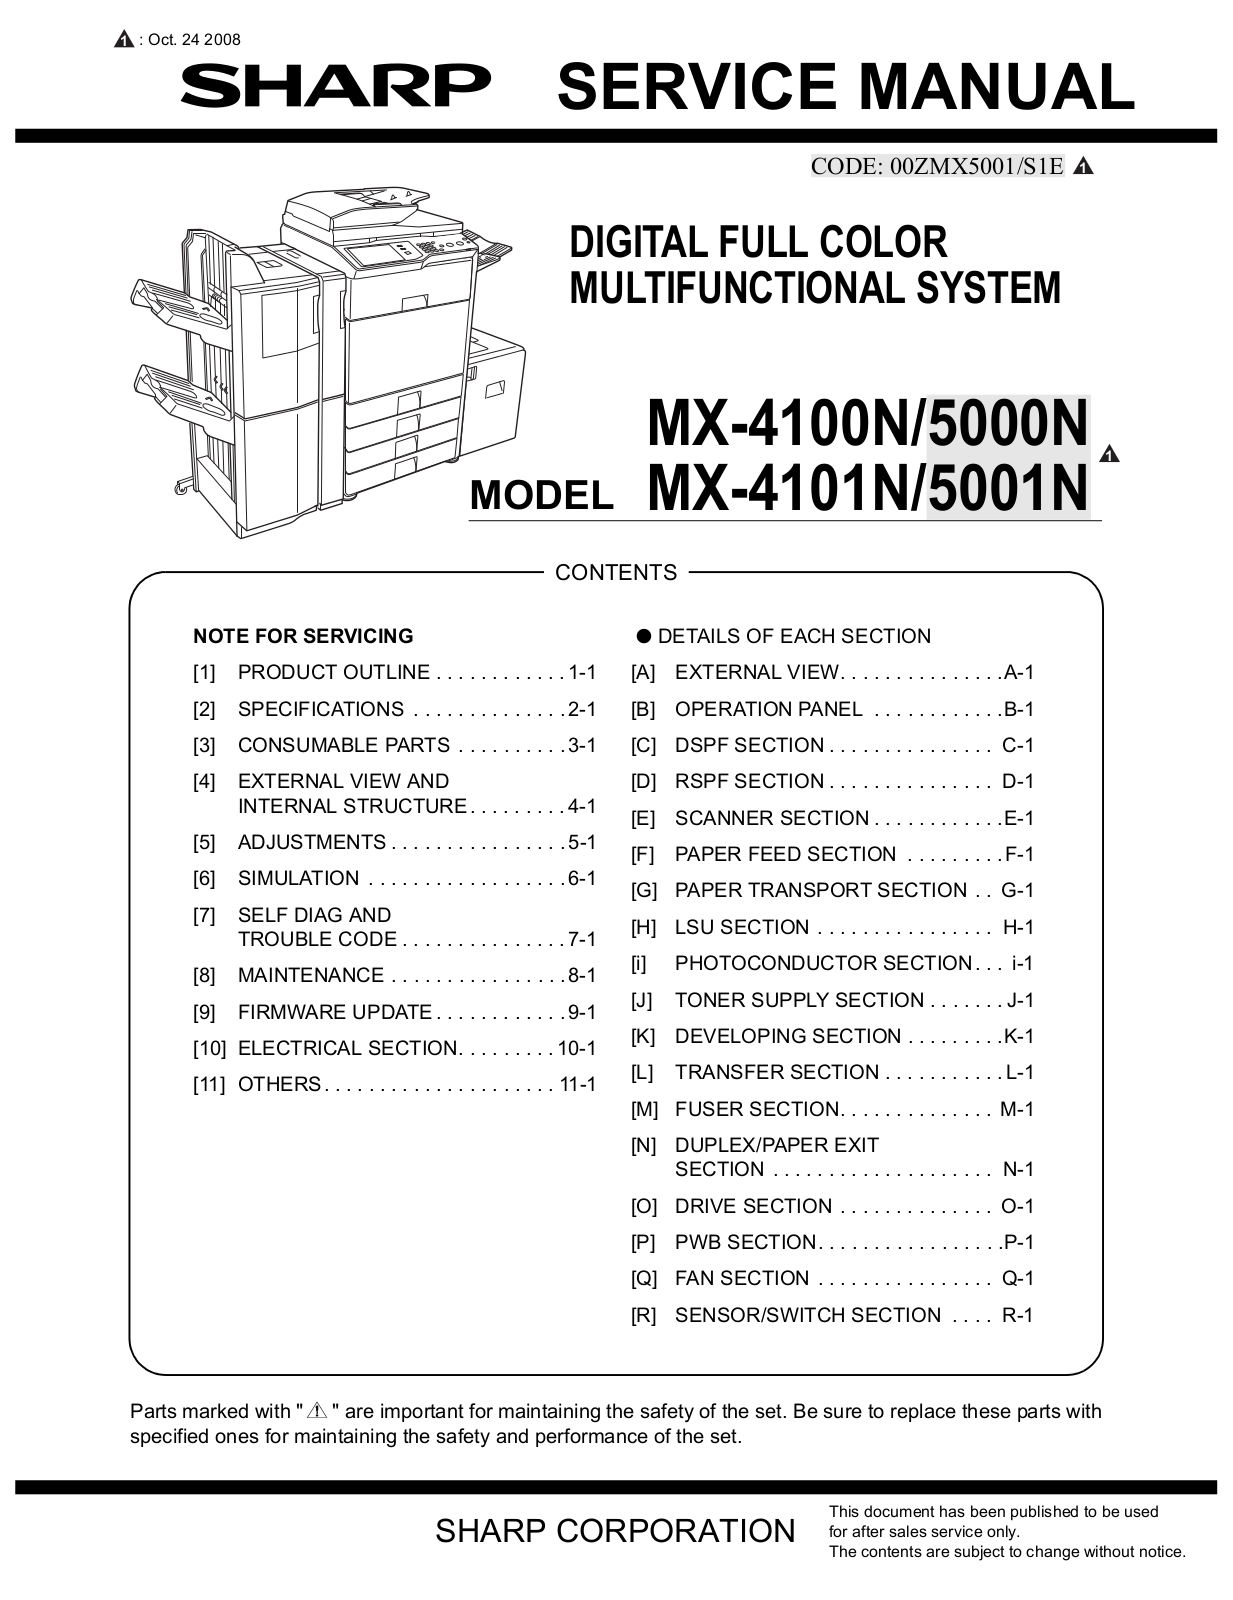 Sharp MX-4100N, MX-5000N, MX-4101N, MX-5001N Service Manual. Circuit Diagram. Parts Guide